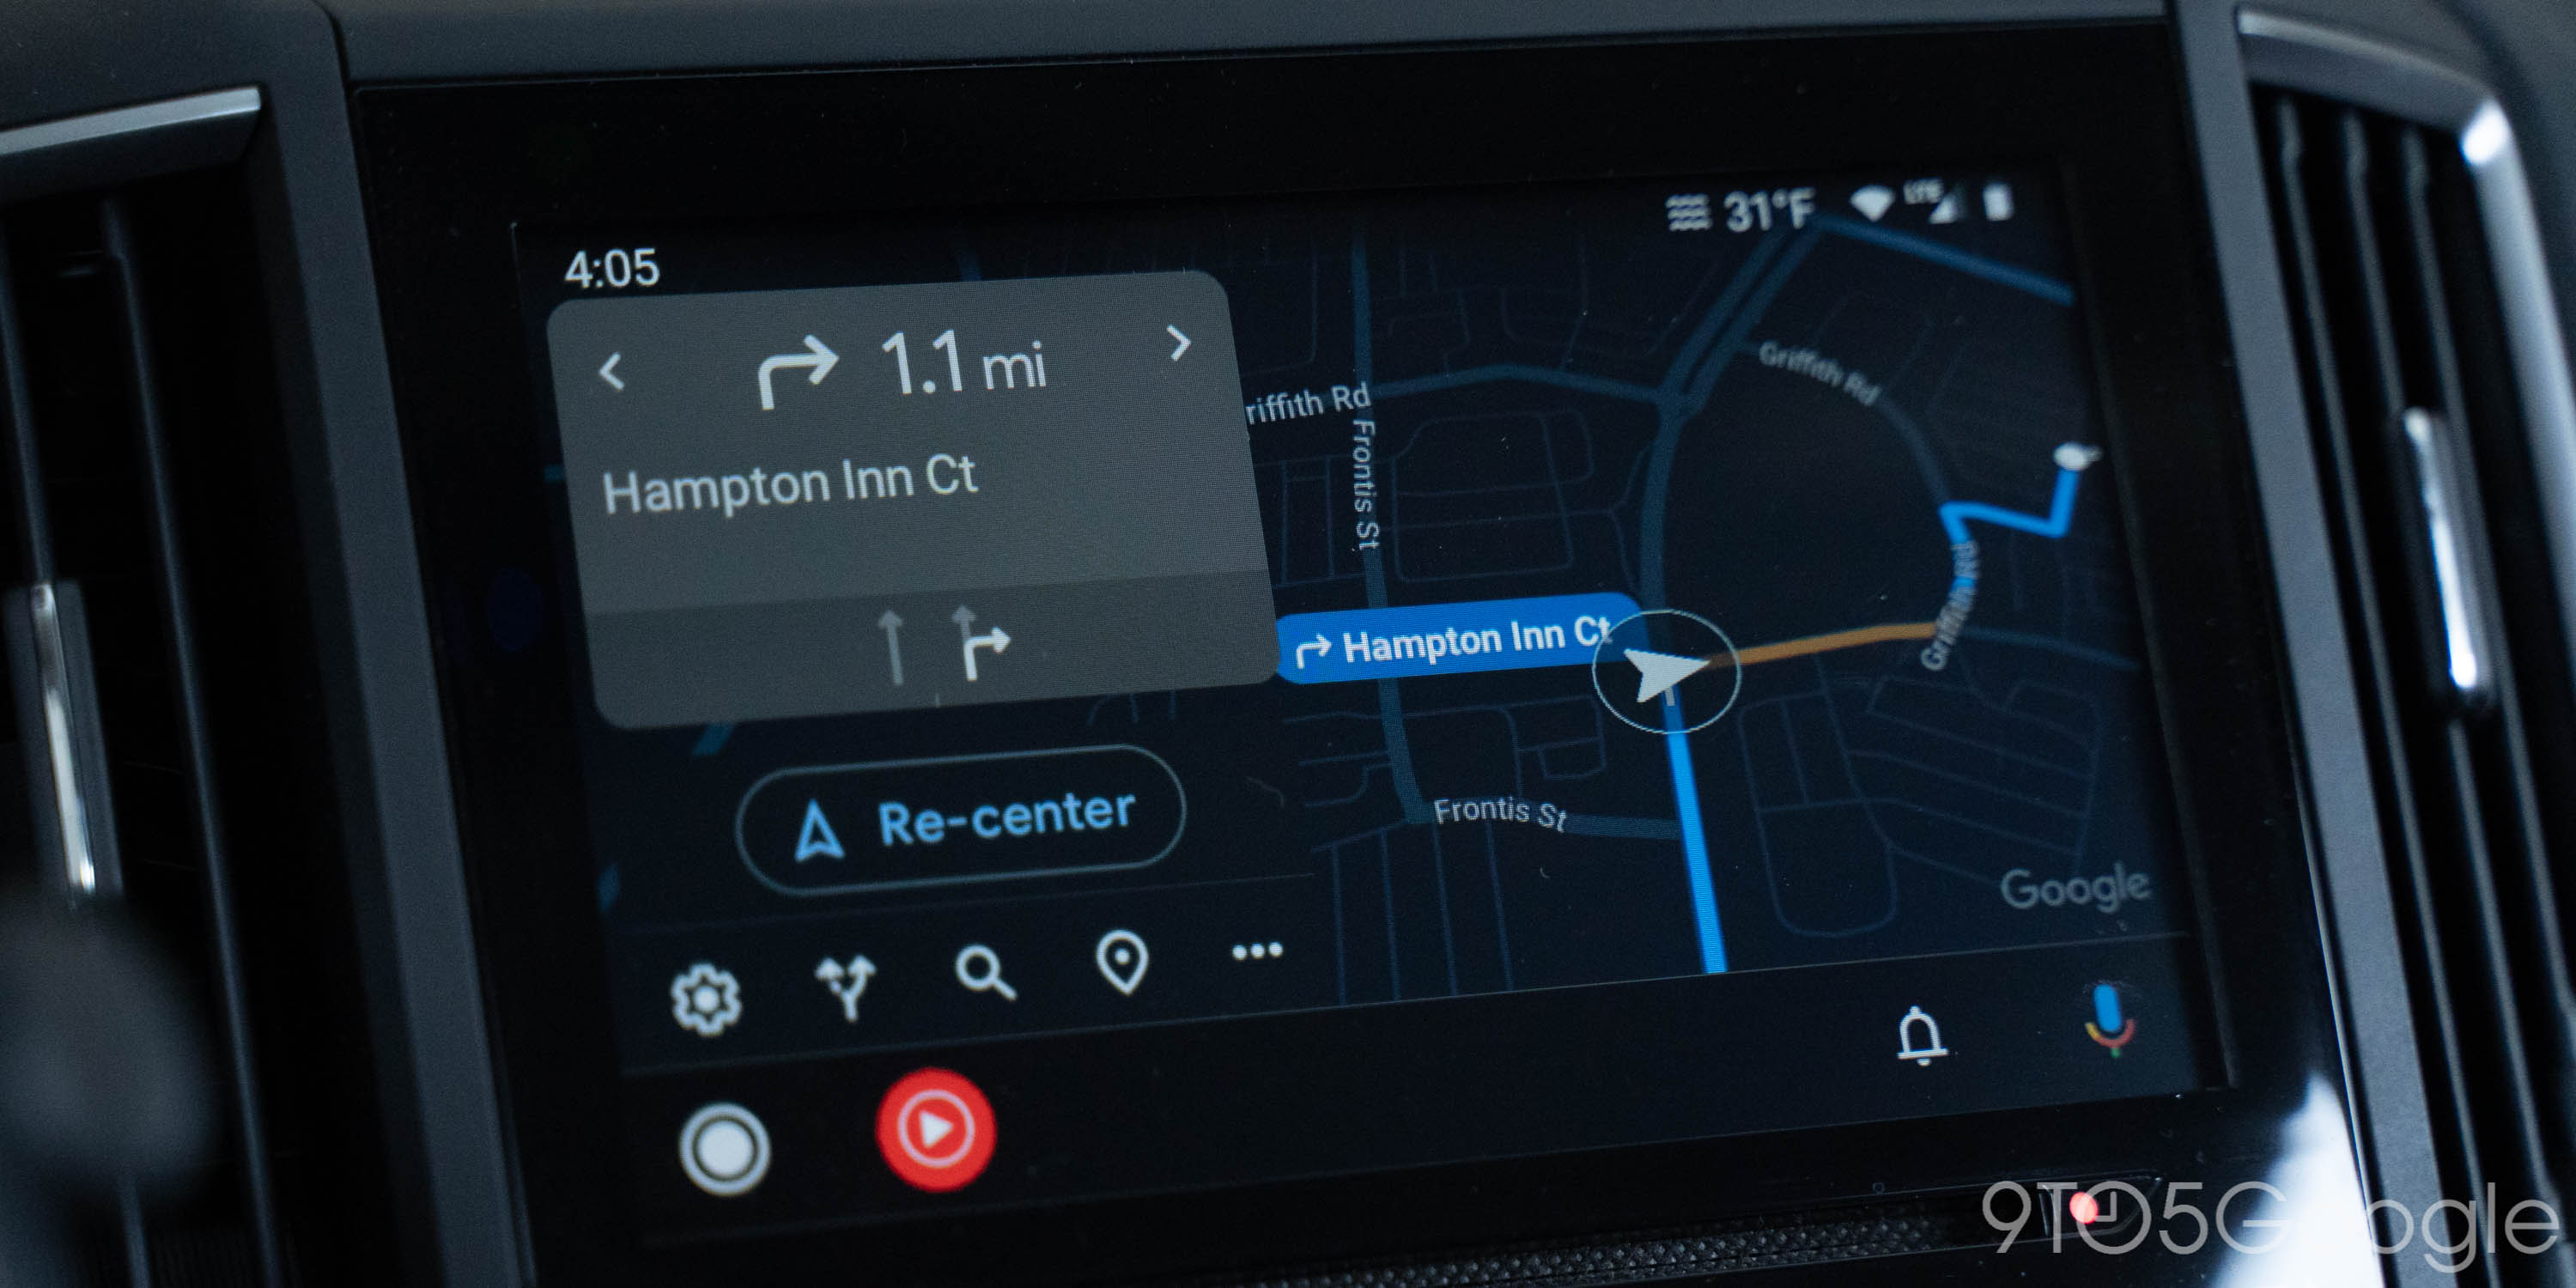 TomTom AmiGo Android Auto further nav option - 9to5Google